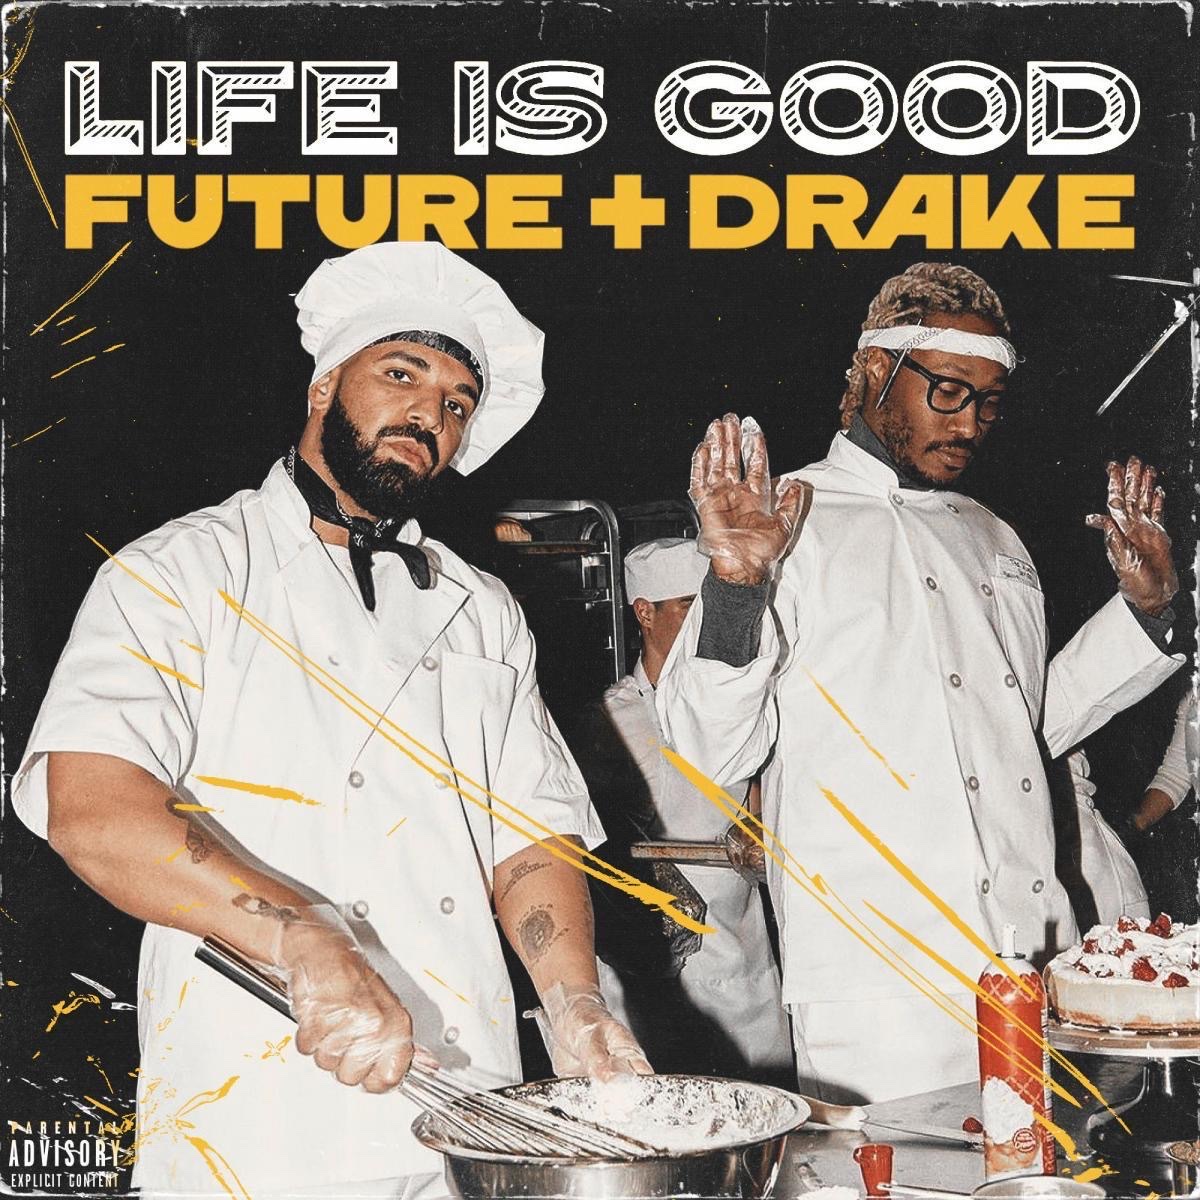 Art for Life Is Good Lyrics ft. Drake by Future